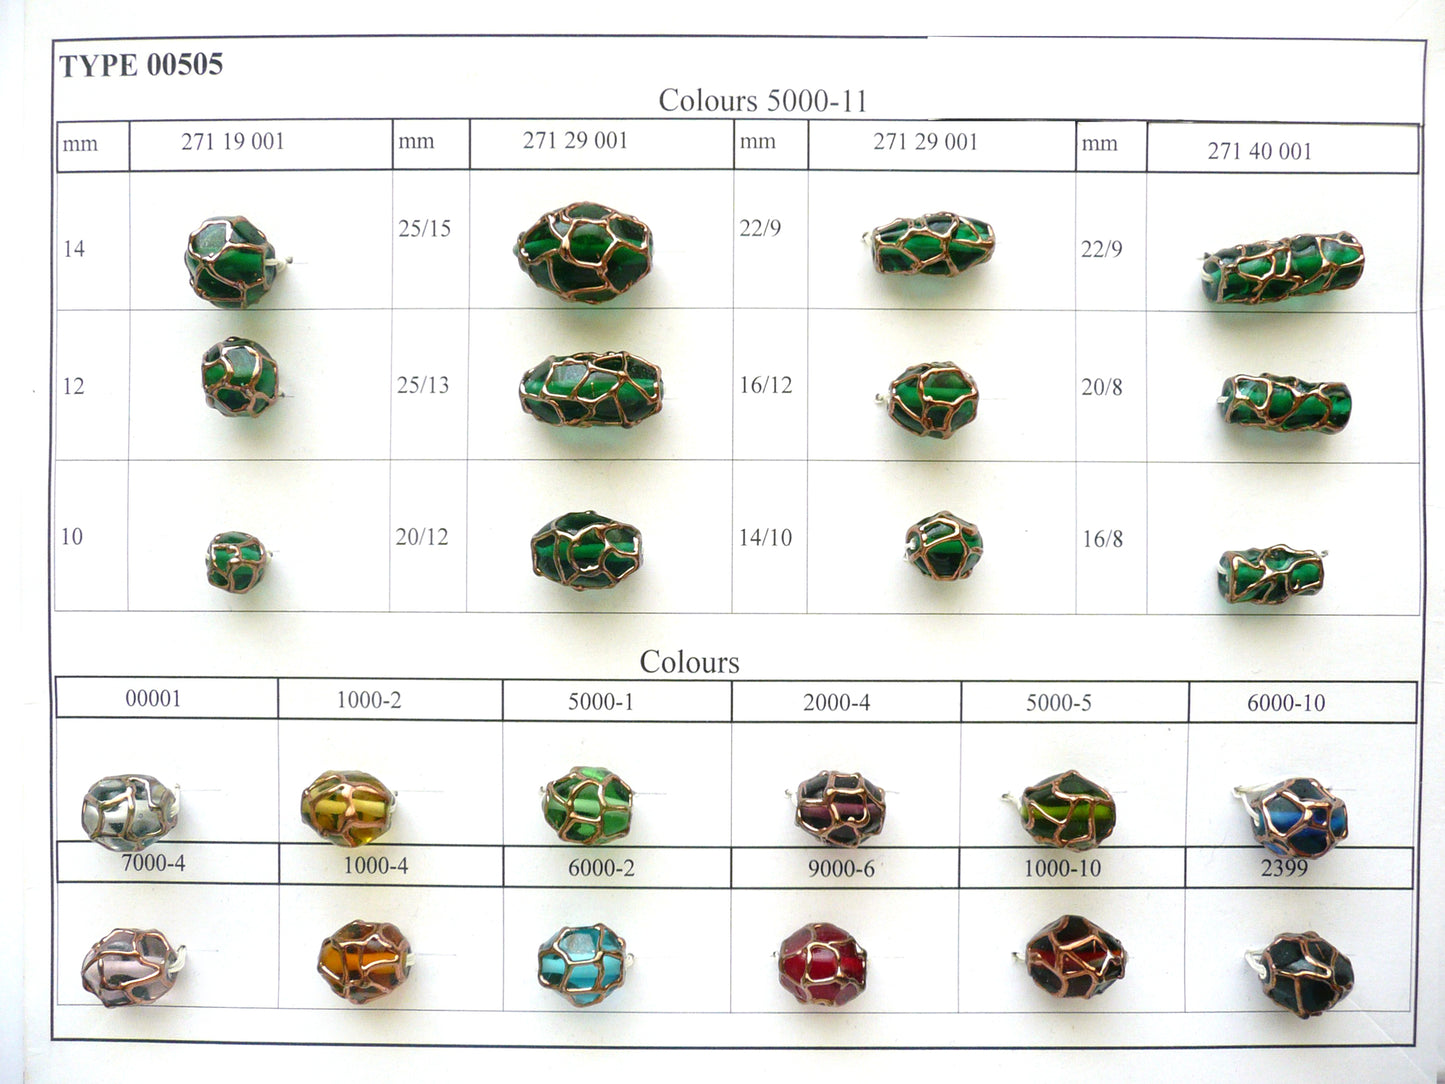 30 pcs Lampwork Beads 505 / Round (271-19-001), Handmade, Preciosa Glass, Czech Republic